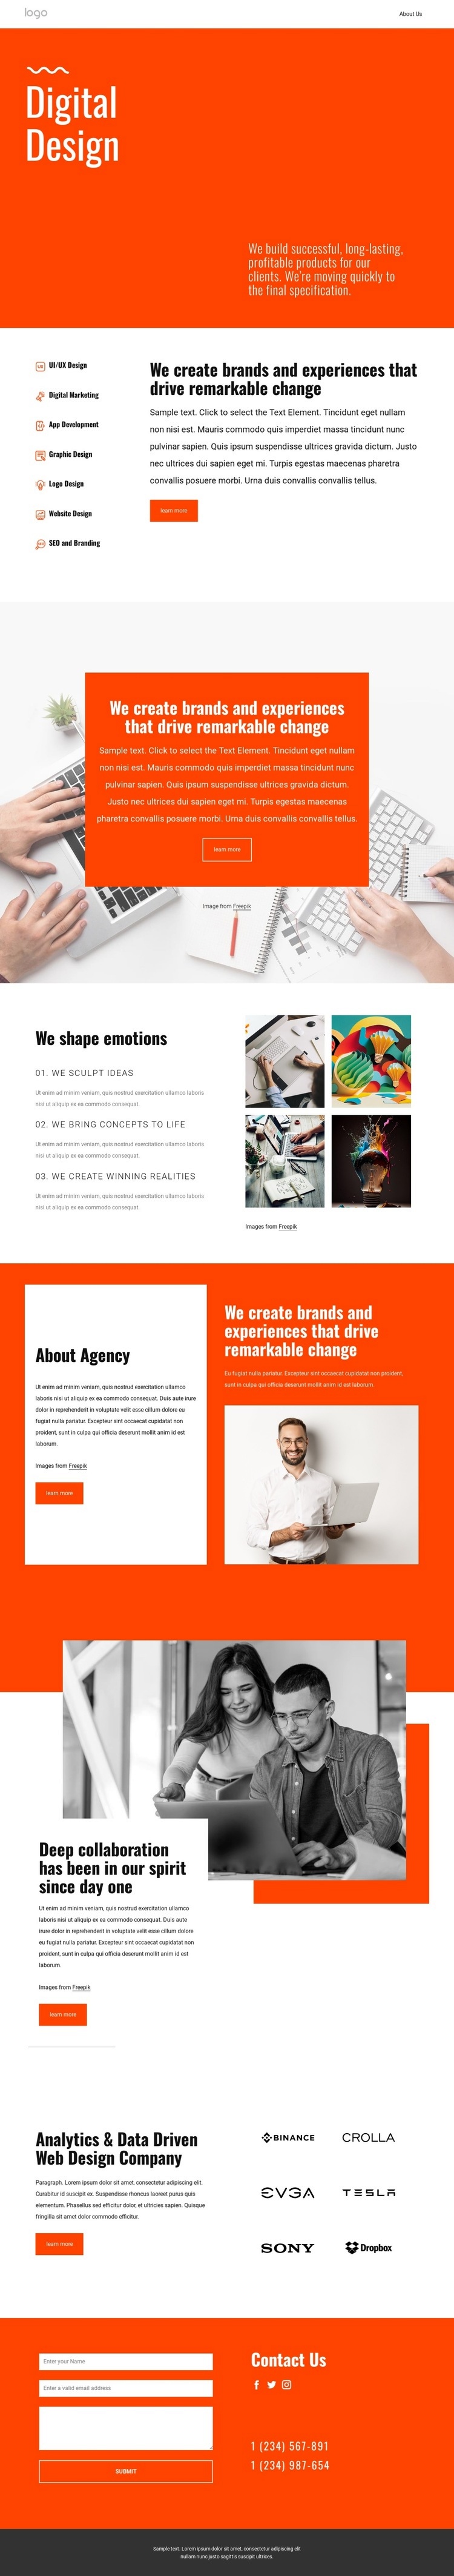 We create experiences Homepage Design